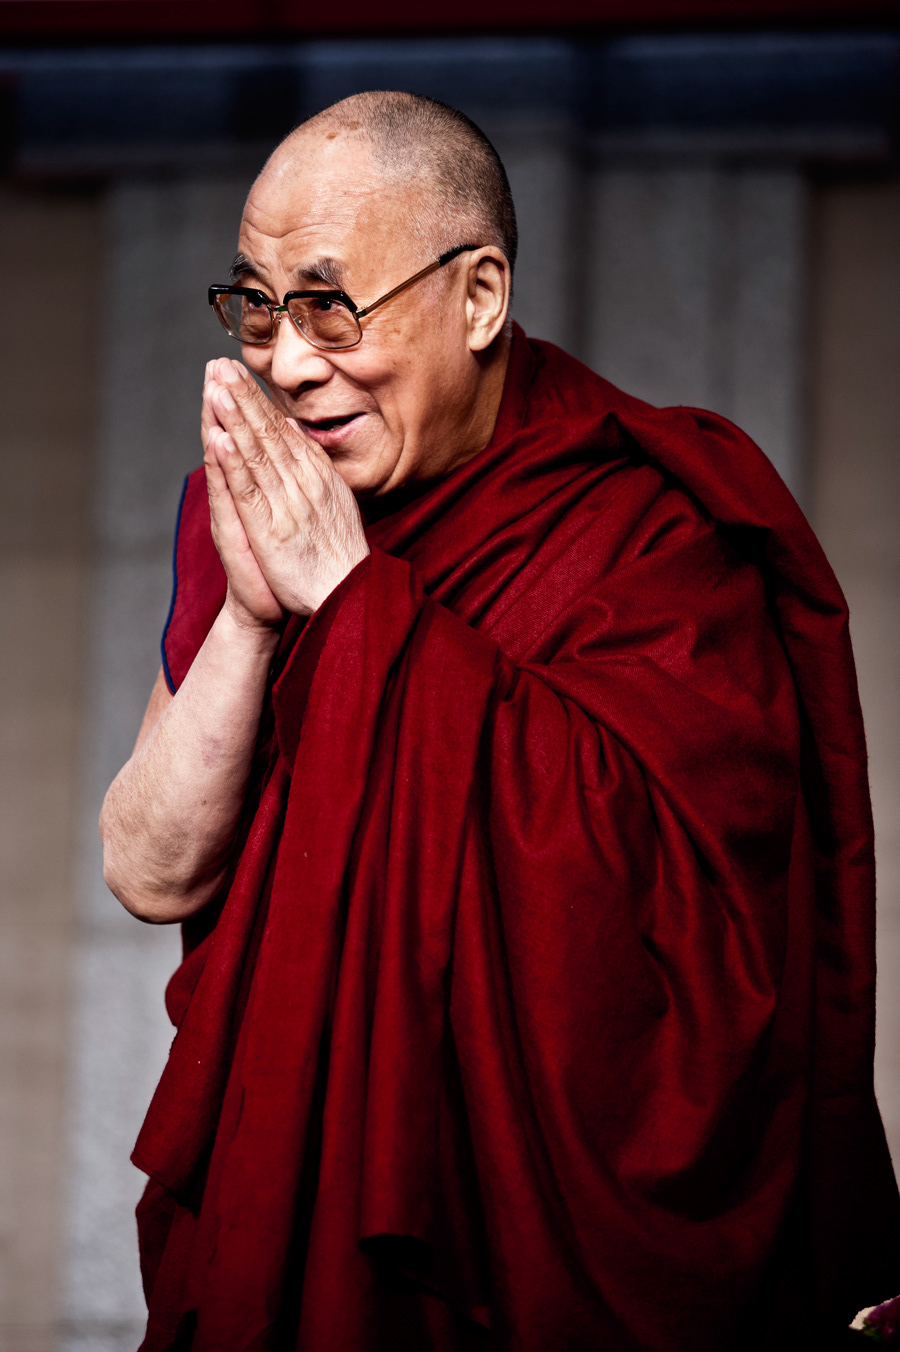 Dalai Lama Famous people editorial people portrait Documentary  spiritual leader